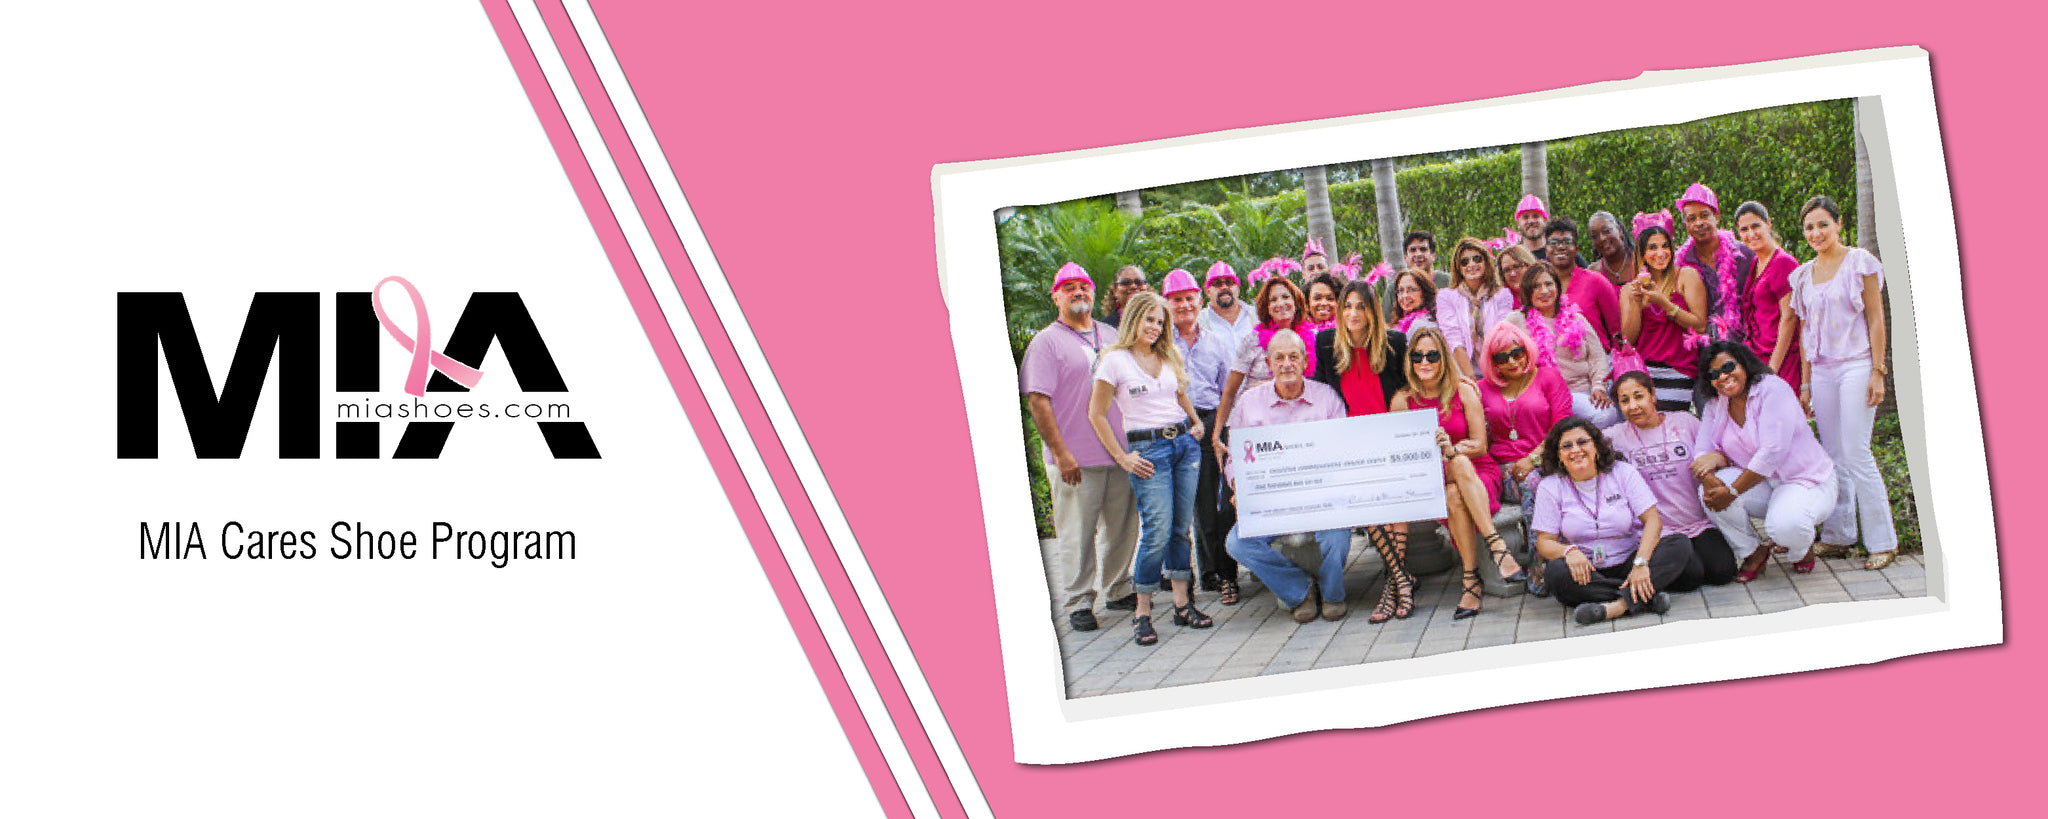 November 07, 2014 MIA Cares Shoe Program Raises $25,000 to Fight Breast Cancer